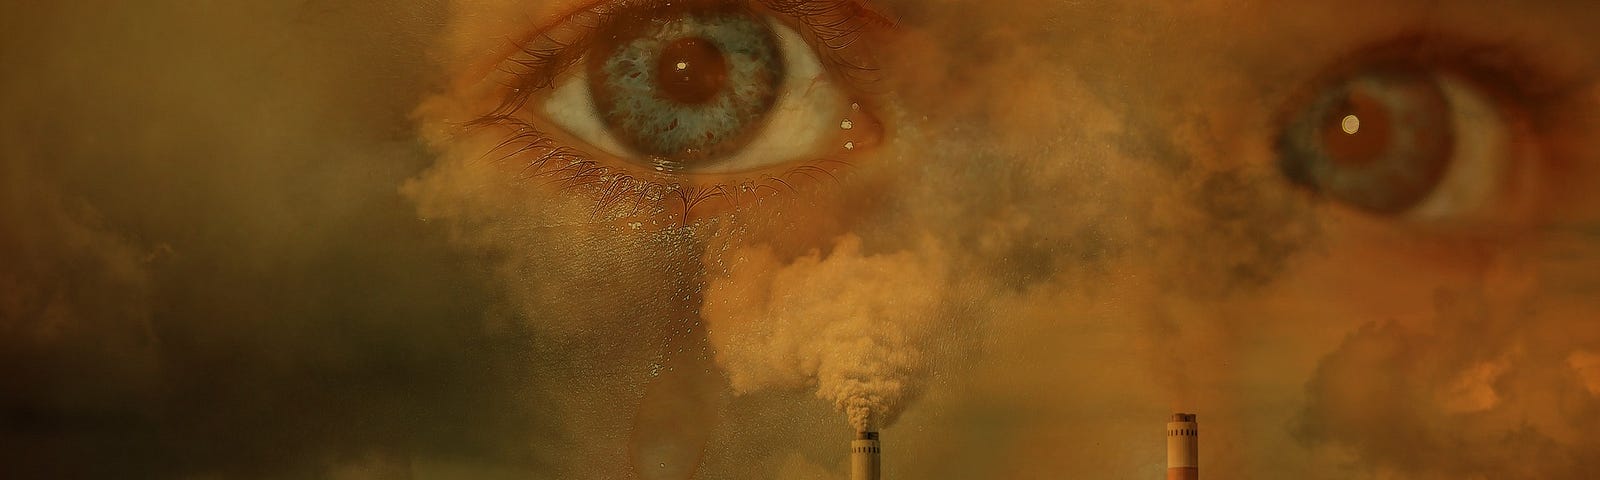 child’s eyes over polluting smokestacks